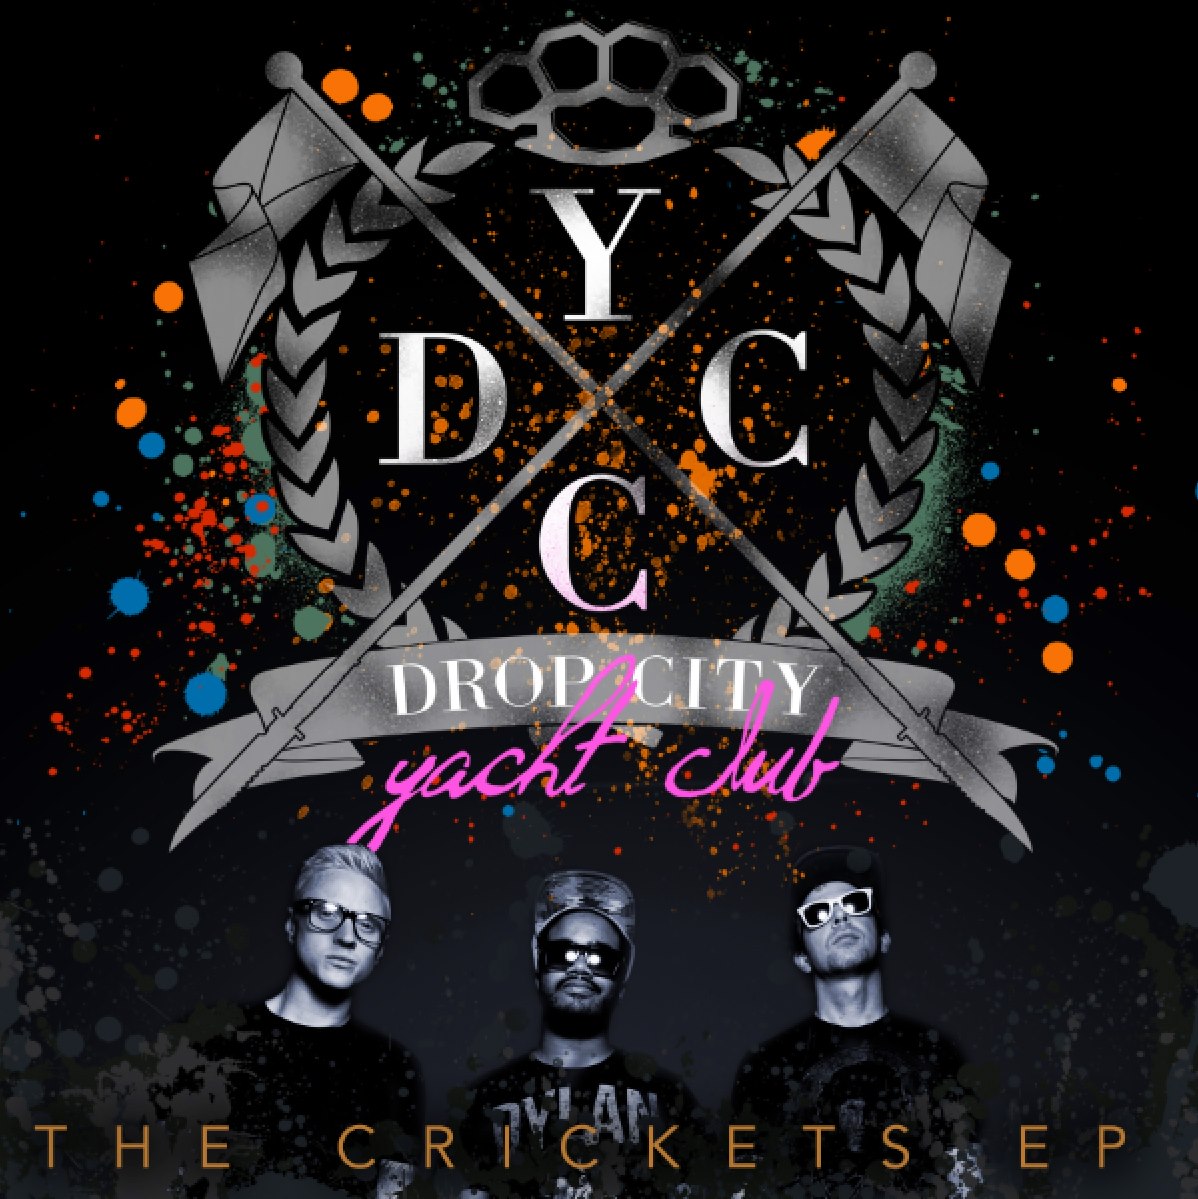 Drop City Yacht Club ft Jeremih “Crickets” [DOPE!]